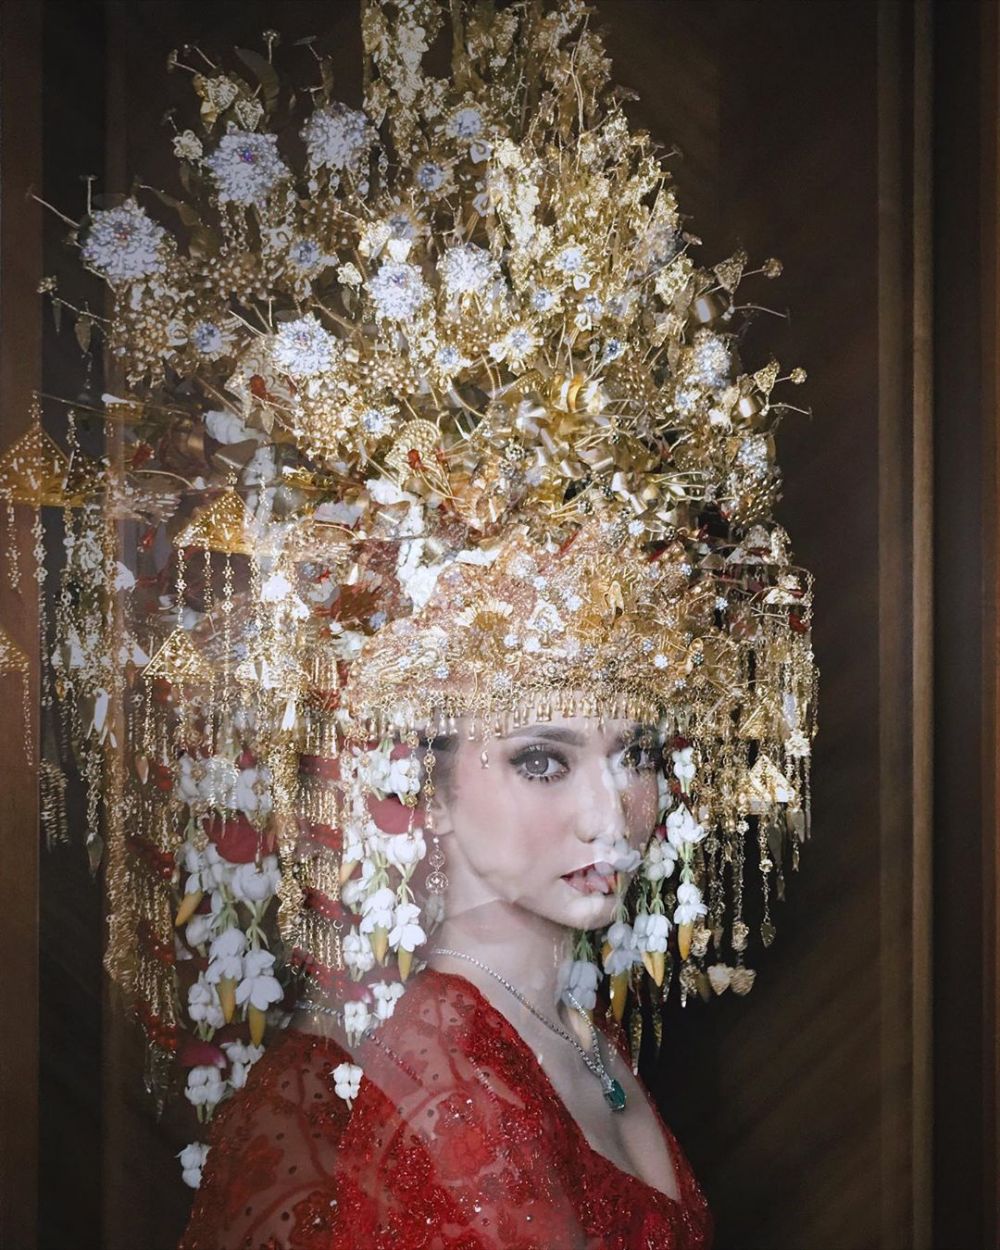 Potret cantik Nadia Saphira berbusana adat Palembang saat nikah